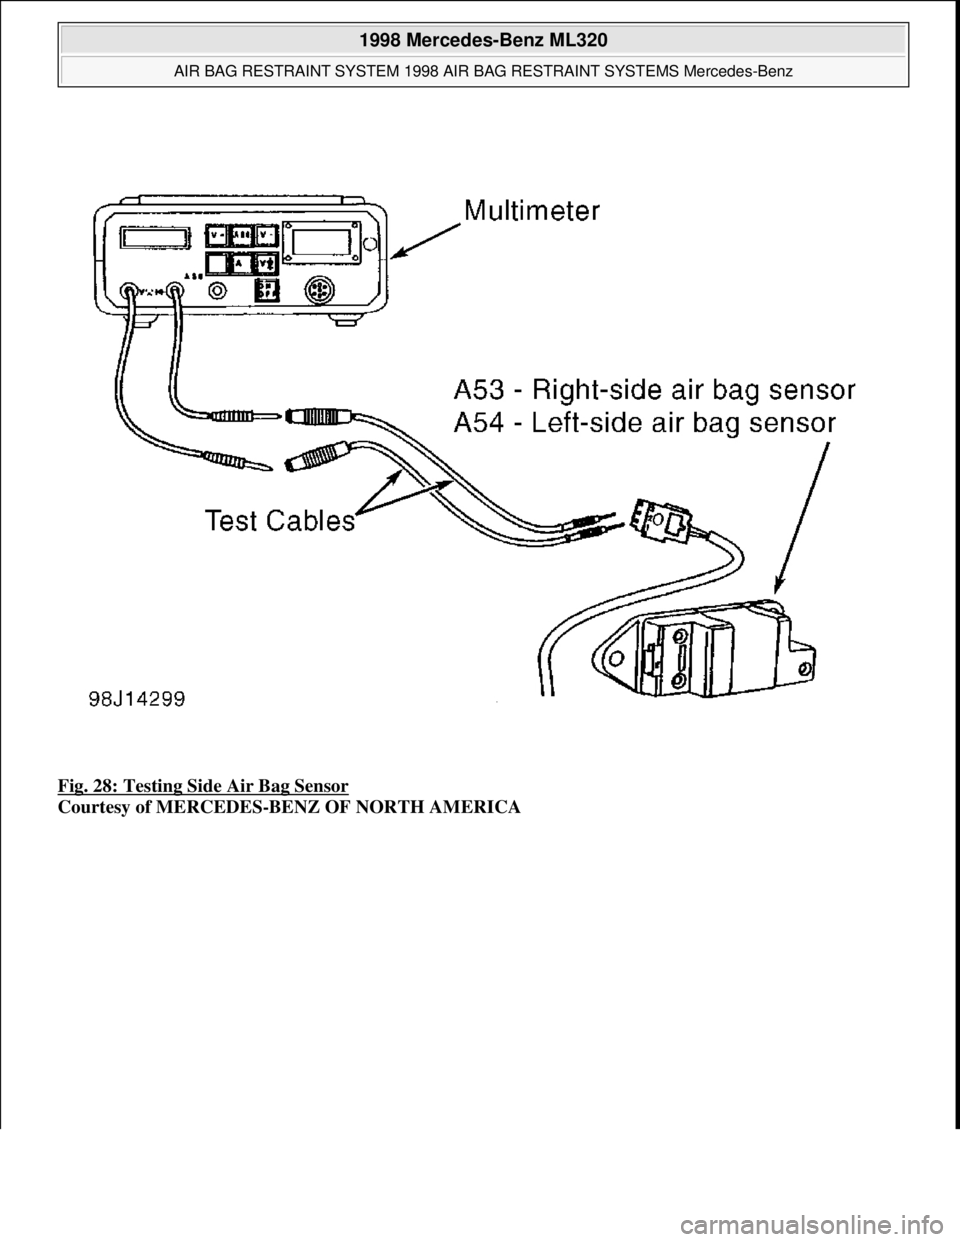 MERCEDES-BENZ ML320 1997  Complete Repair Manual Fig. 28: Testing Side Air Bag Sensor 
Courtesy of MERCEDES-BENZ OF NORTH AMERICA
 
1998 Mercedes-Benz ML320 
AIR BAG RESTRAINT SYSTEM 1998 AIR BAG RESTRAINT SYSTEMS Mercedes-Benz  
me  
Saturday, Octo